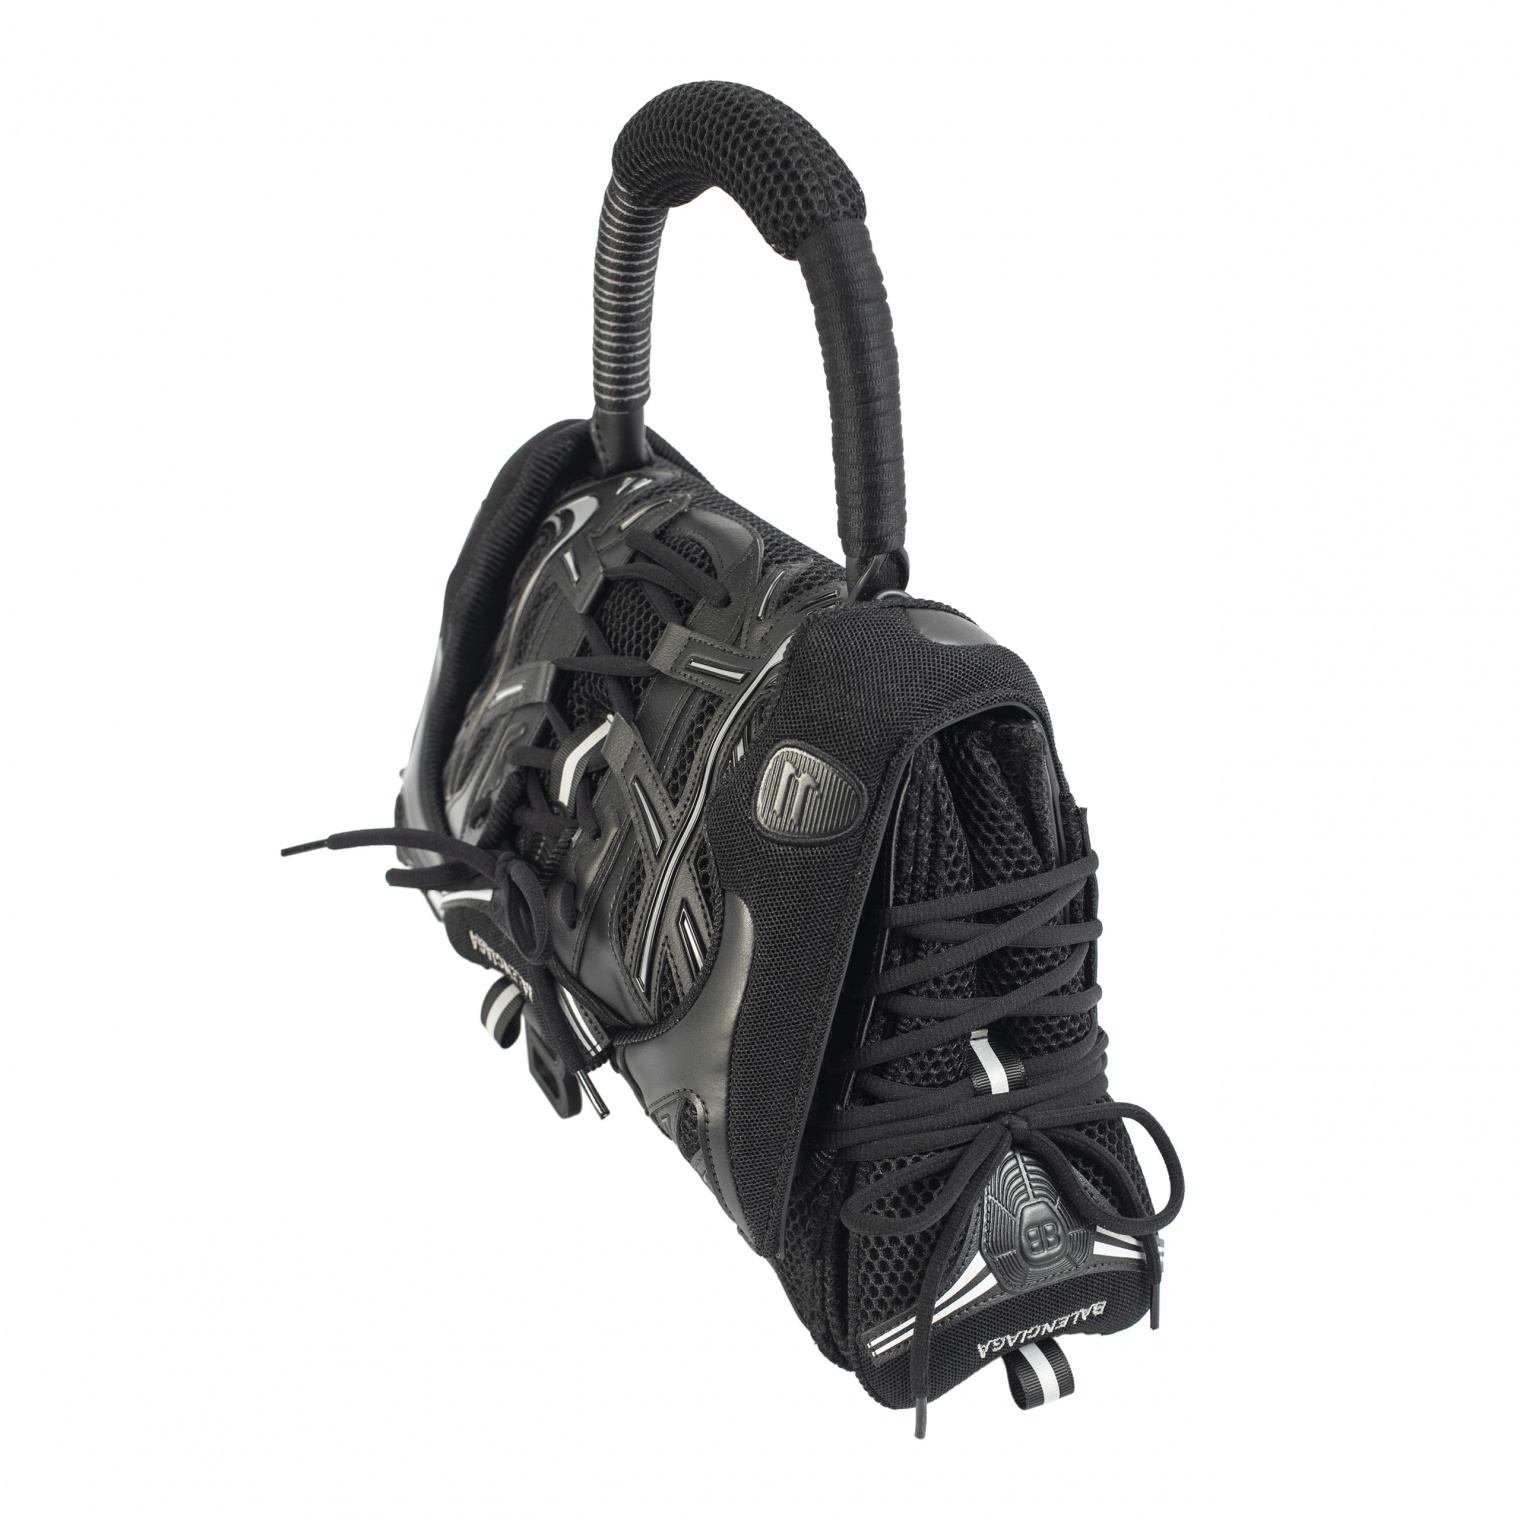 Balenciaga Sneakerhead Top Handle Bag in black